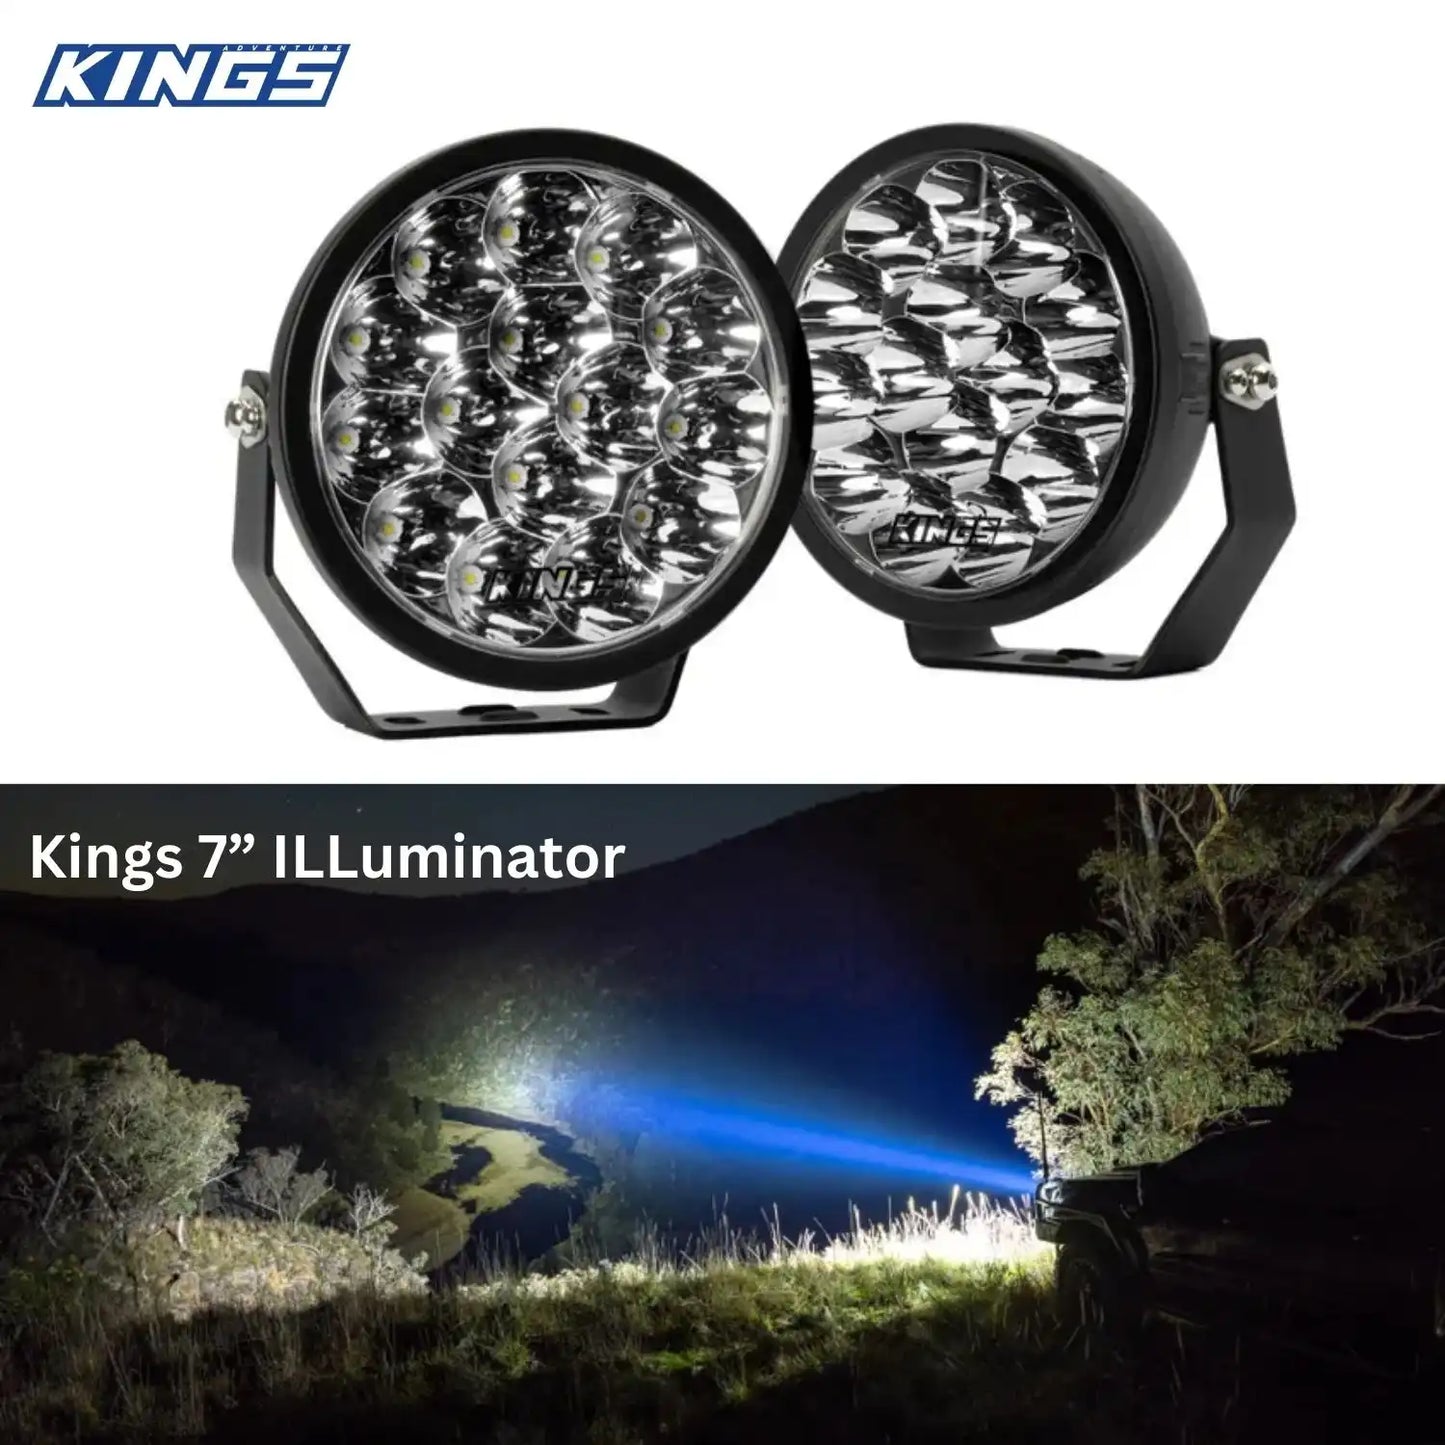 Adventure Kings 7 inch Illuminator Driving Light 